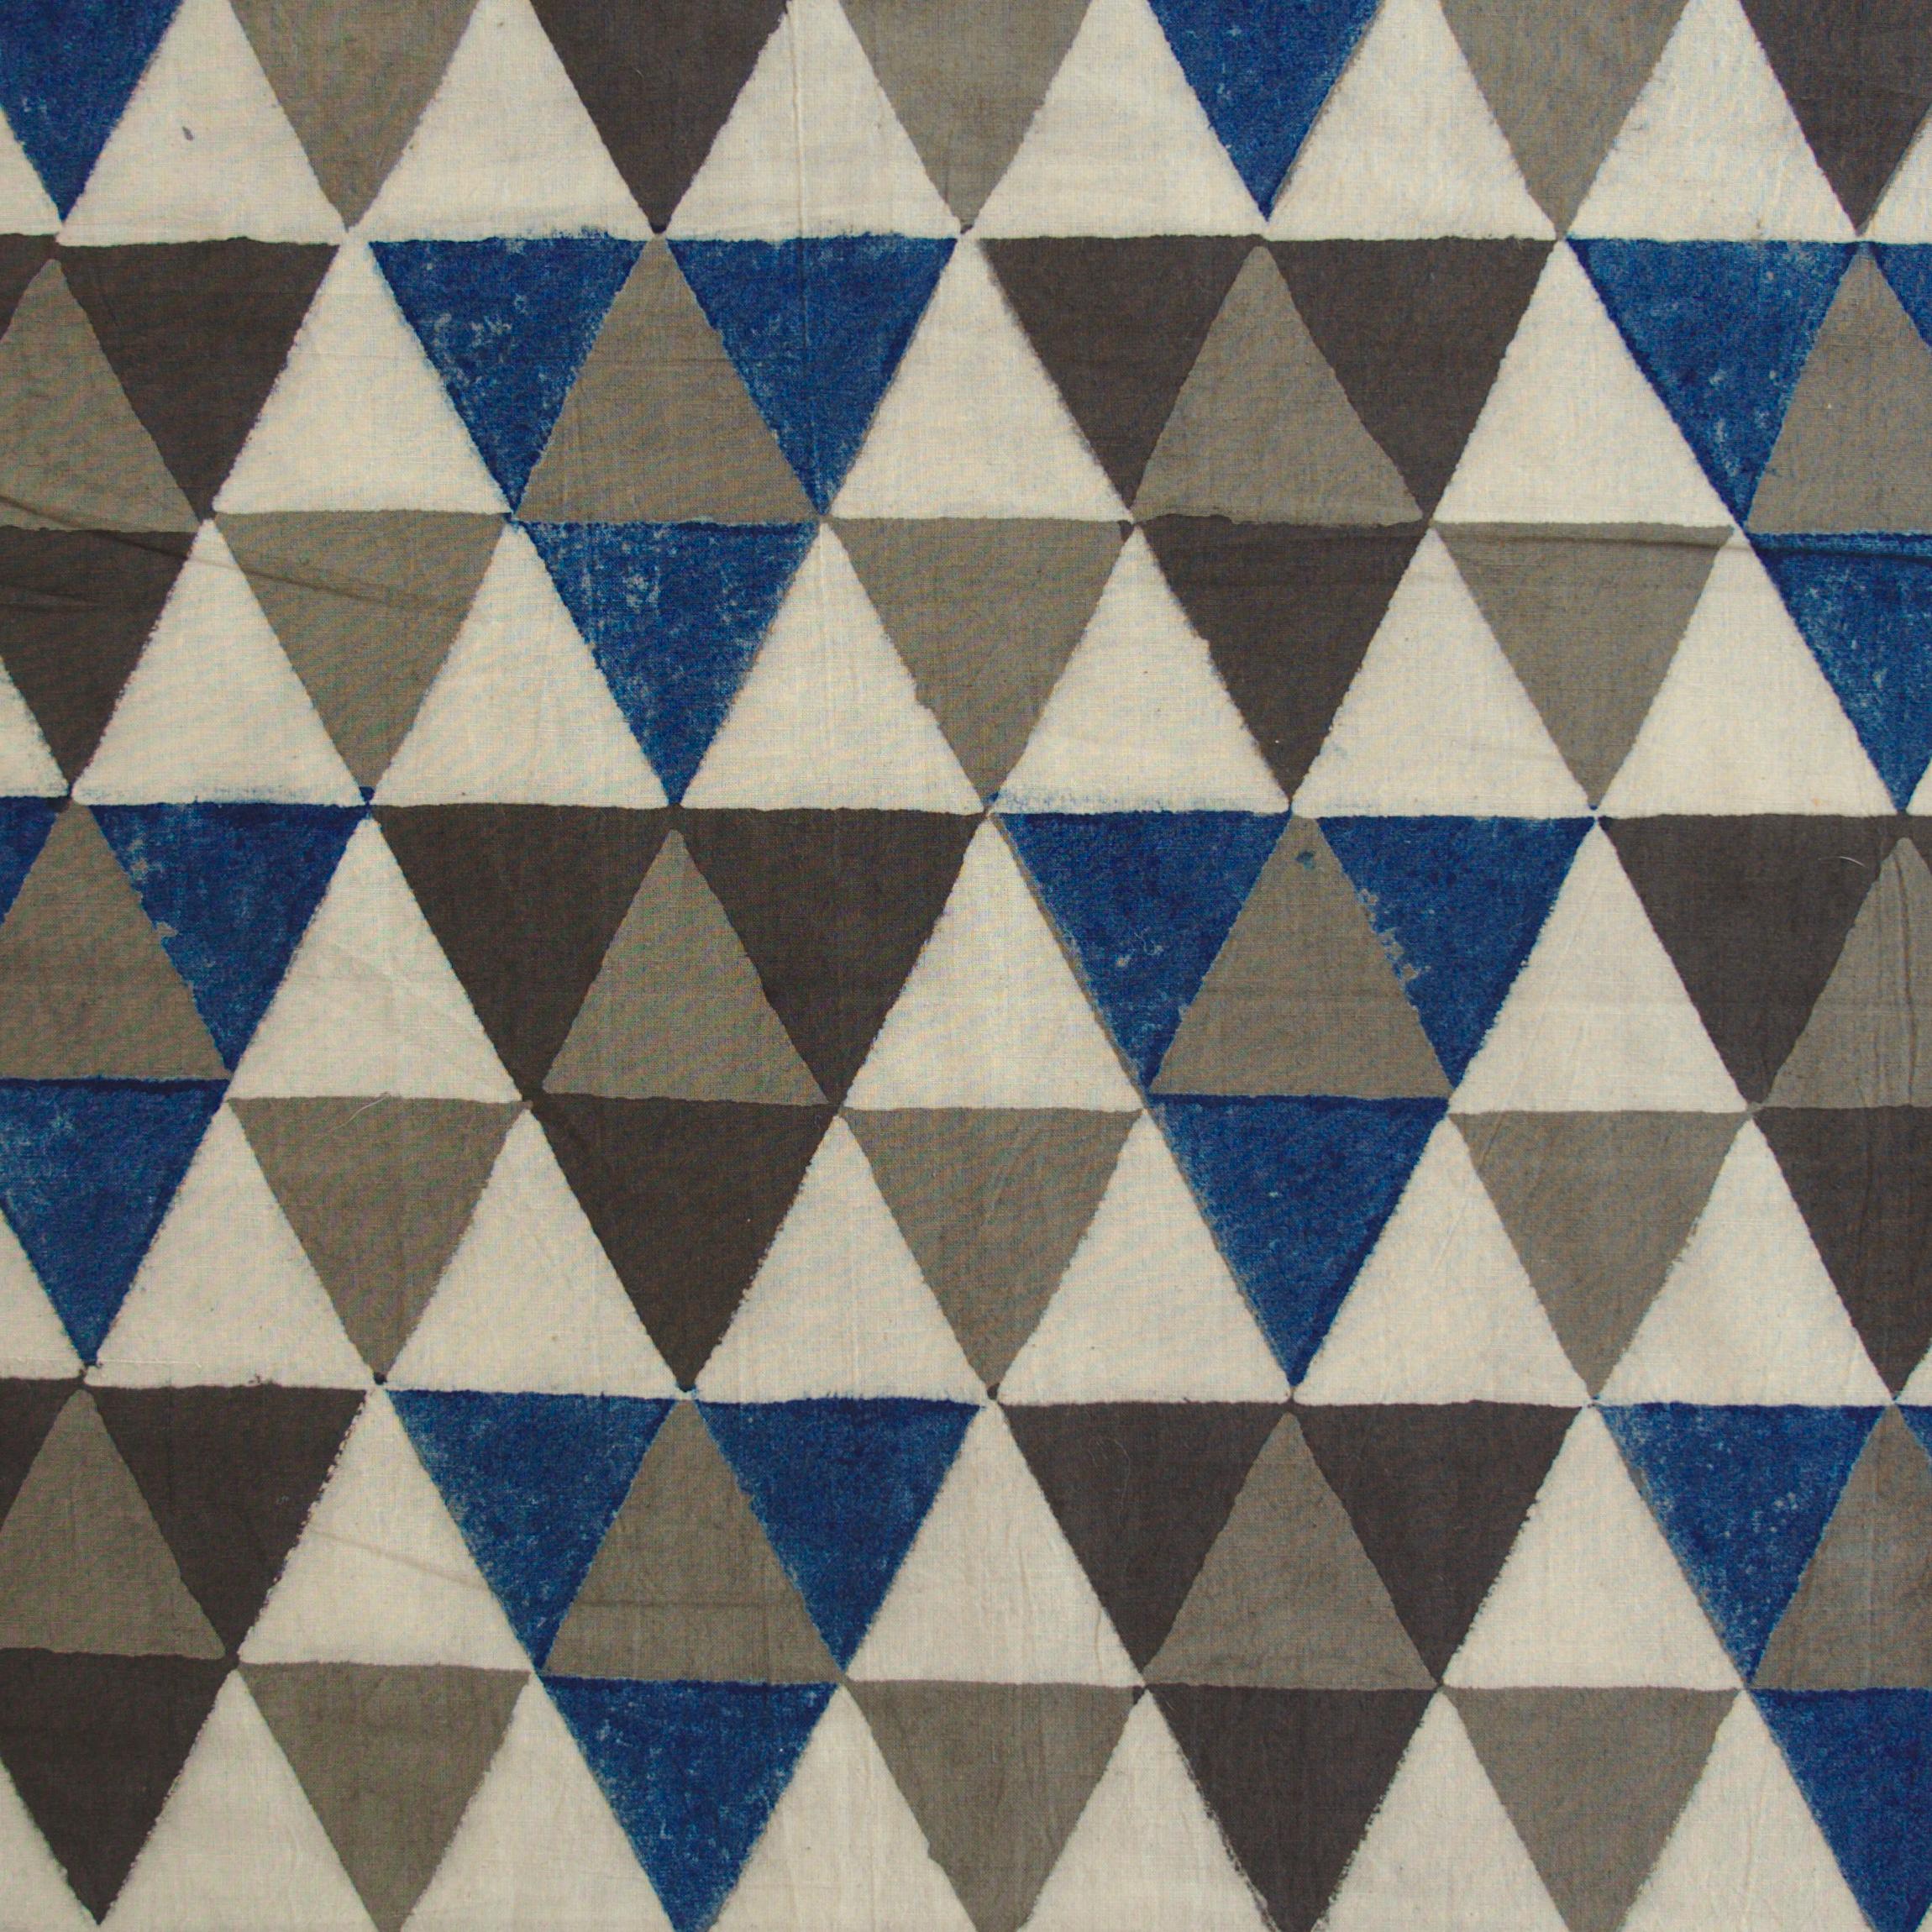 Block Printed Fabric, 100% Cotton, Ajrak Design: Beige Base, Small Grey Triangles, Big Indigo Blue, Black Triangles. Close Up